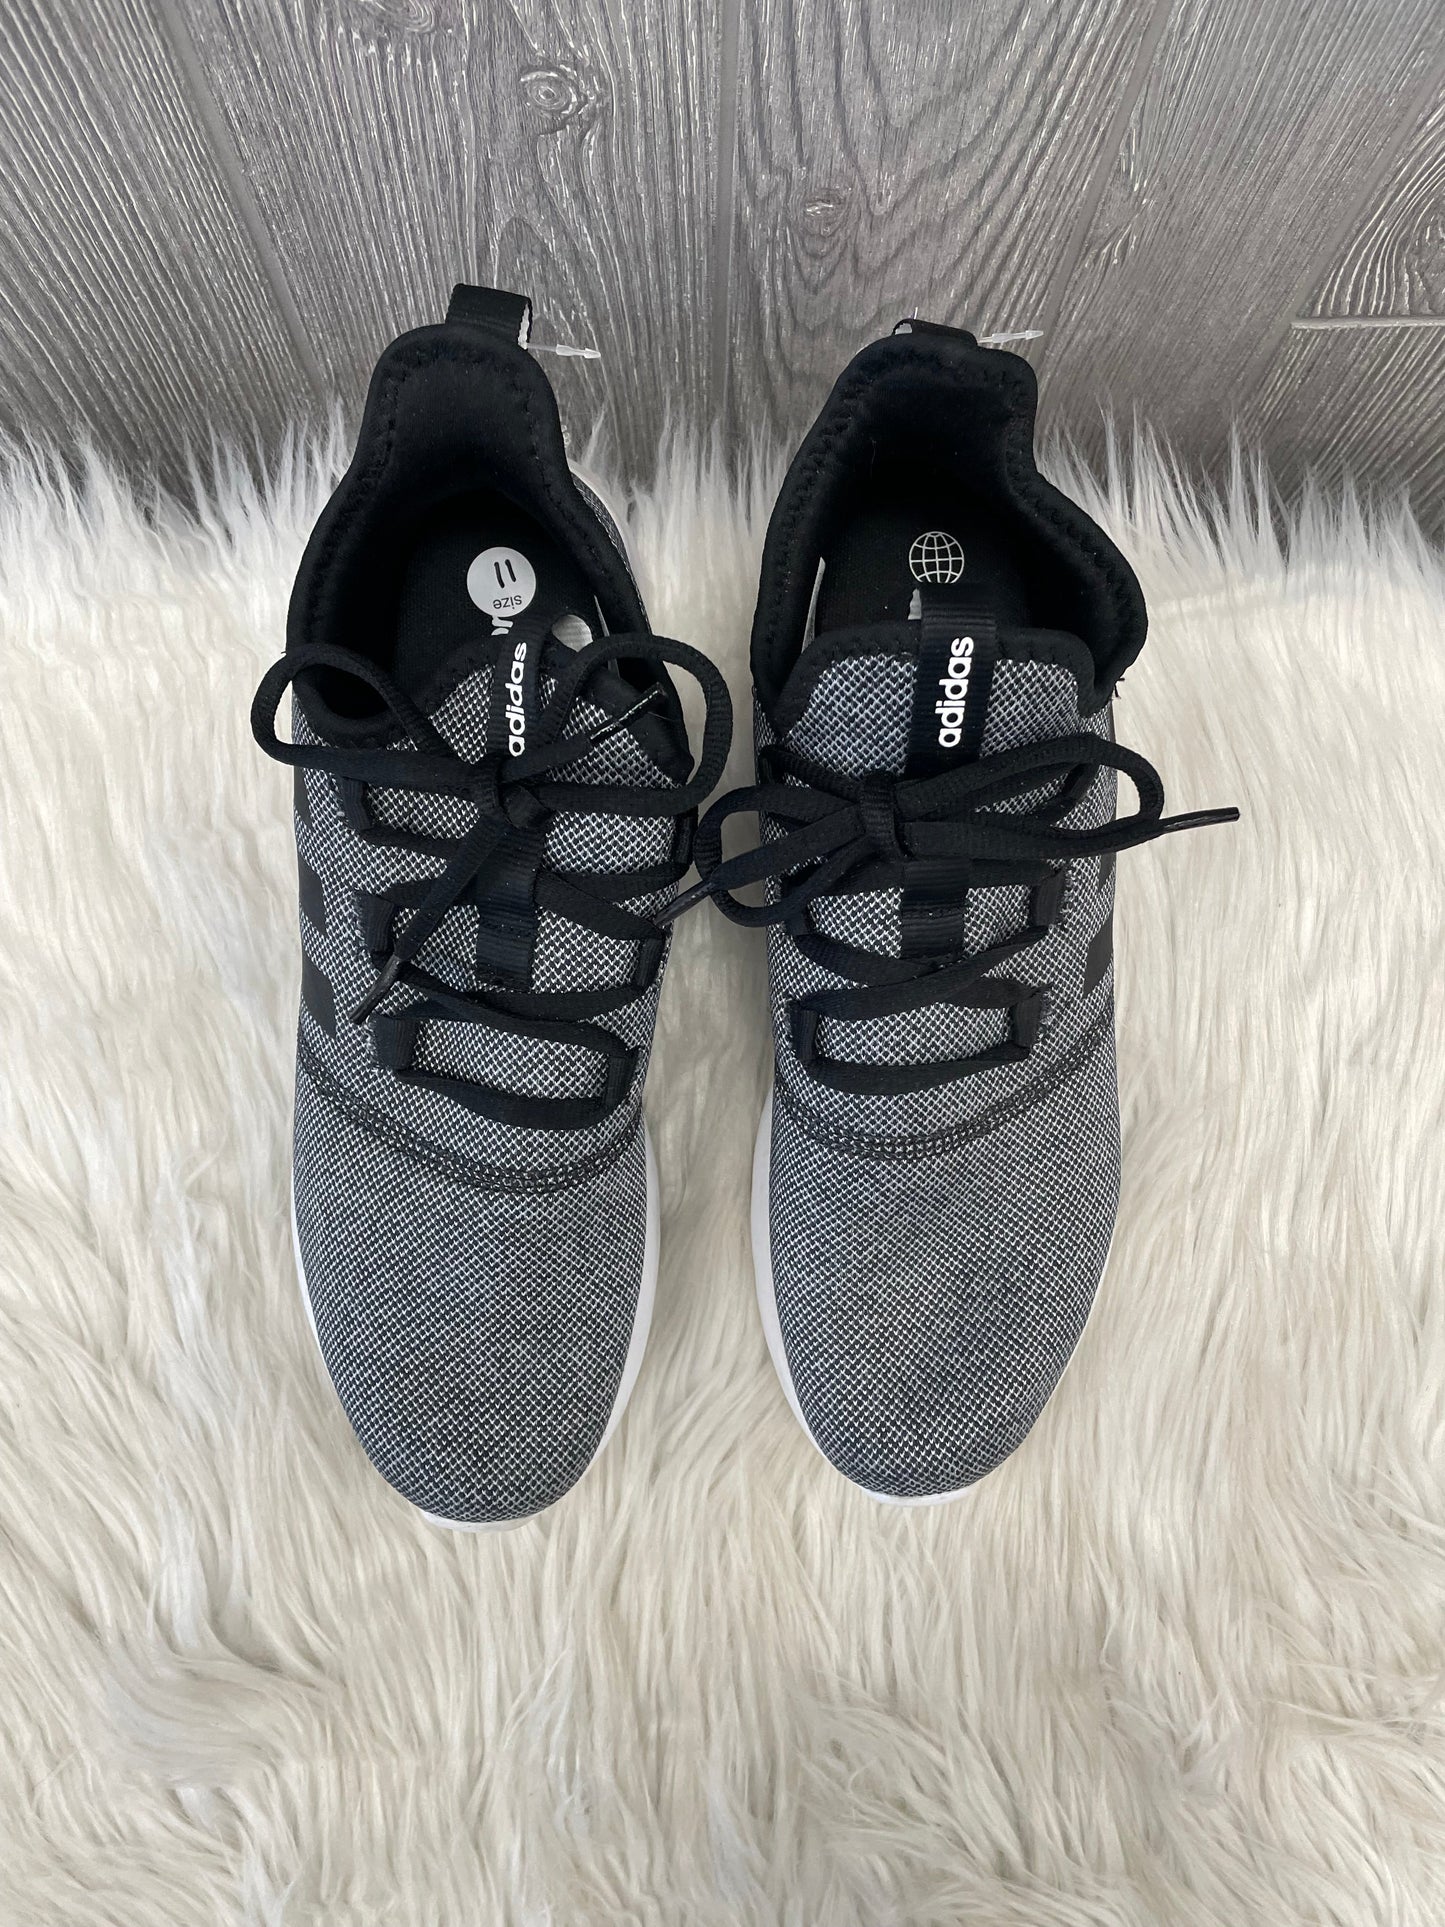 Grey Shoes Athletic Adidas, Size 11